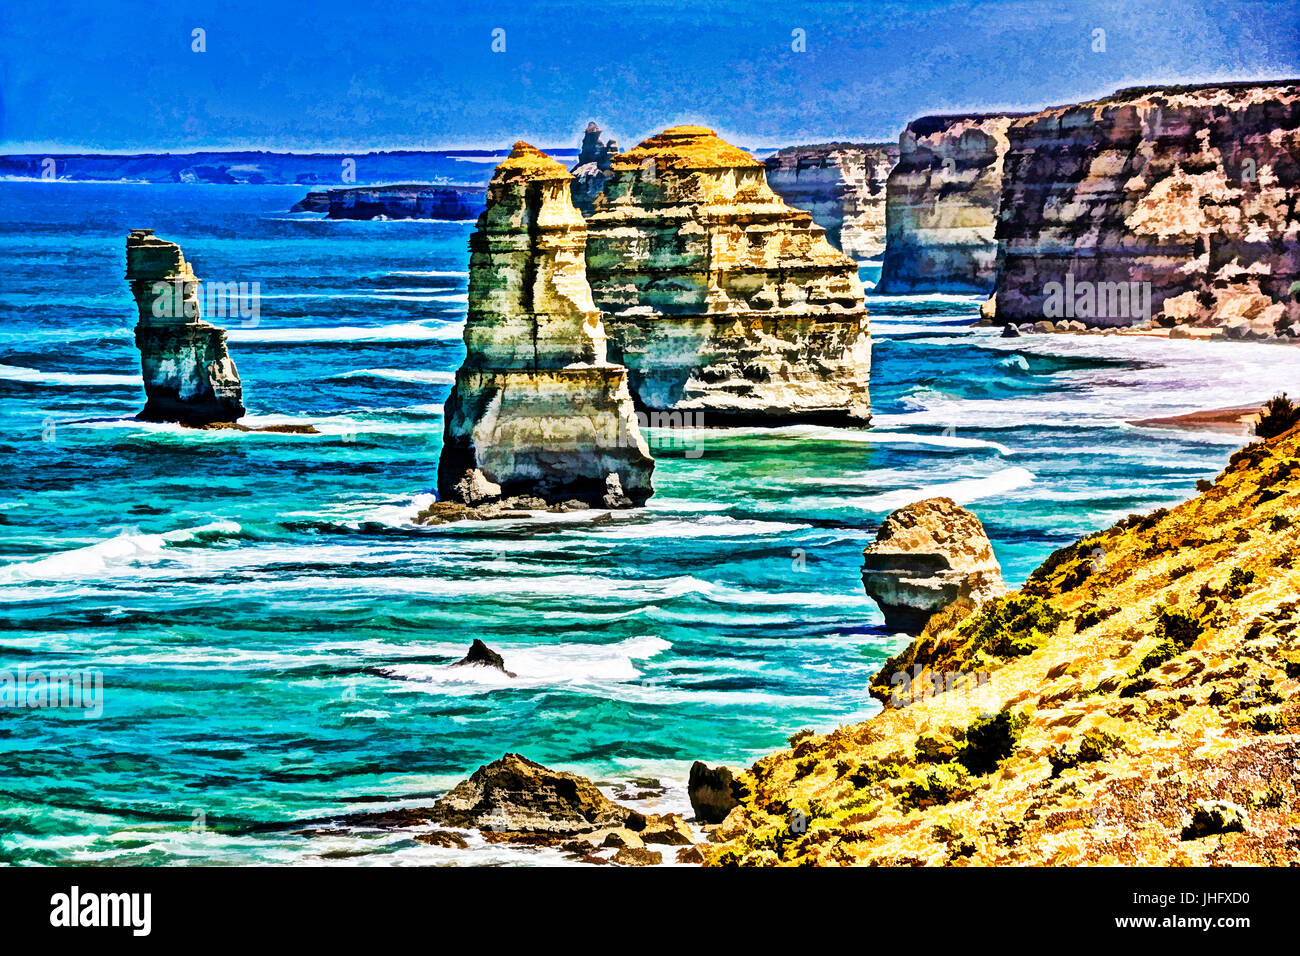 Die zwölf Apostel Kalkstein Stacks entlang der Great Ocean Road in Victoria, Australien.          --Digitale Fotokunst, Malerei Stockfoto